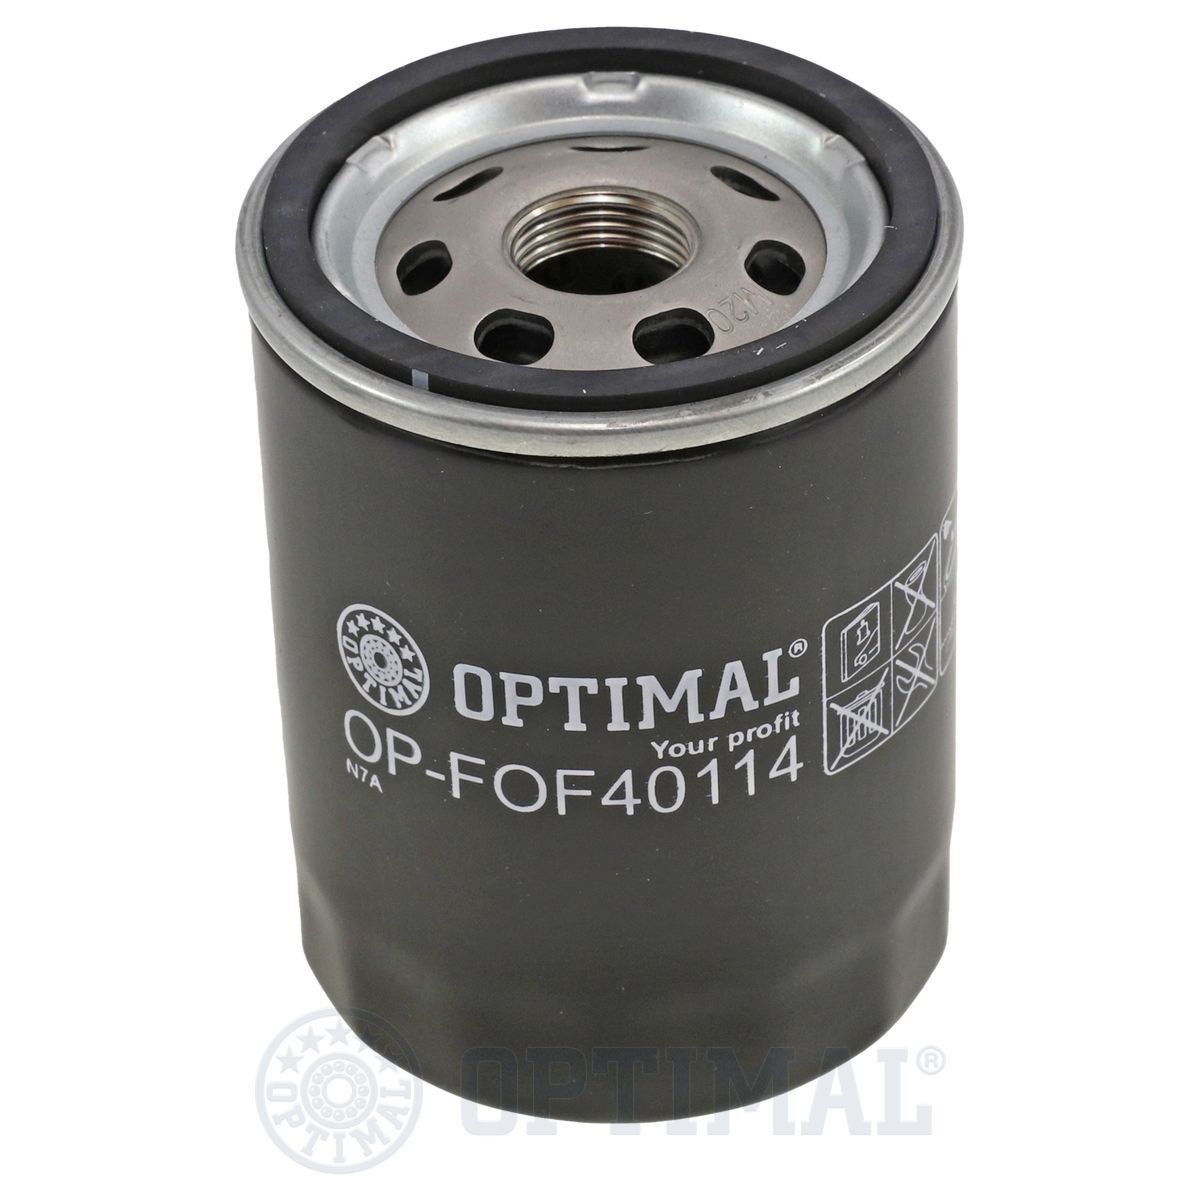 OPTIMAL OP-FOF40114 Oil filter 7175 3738